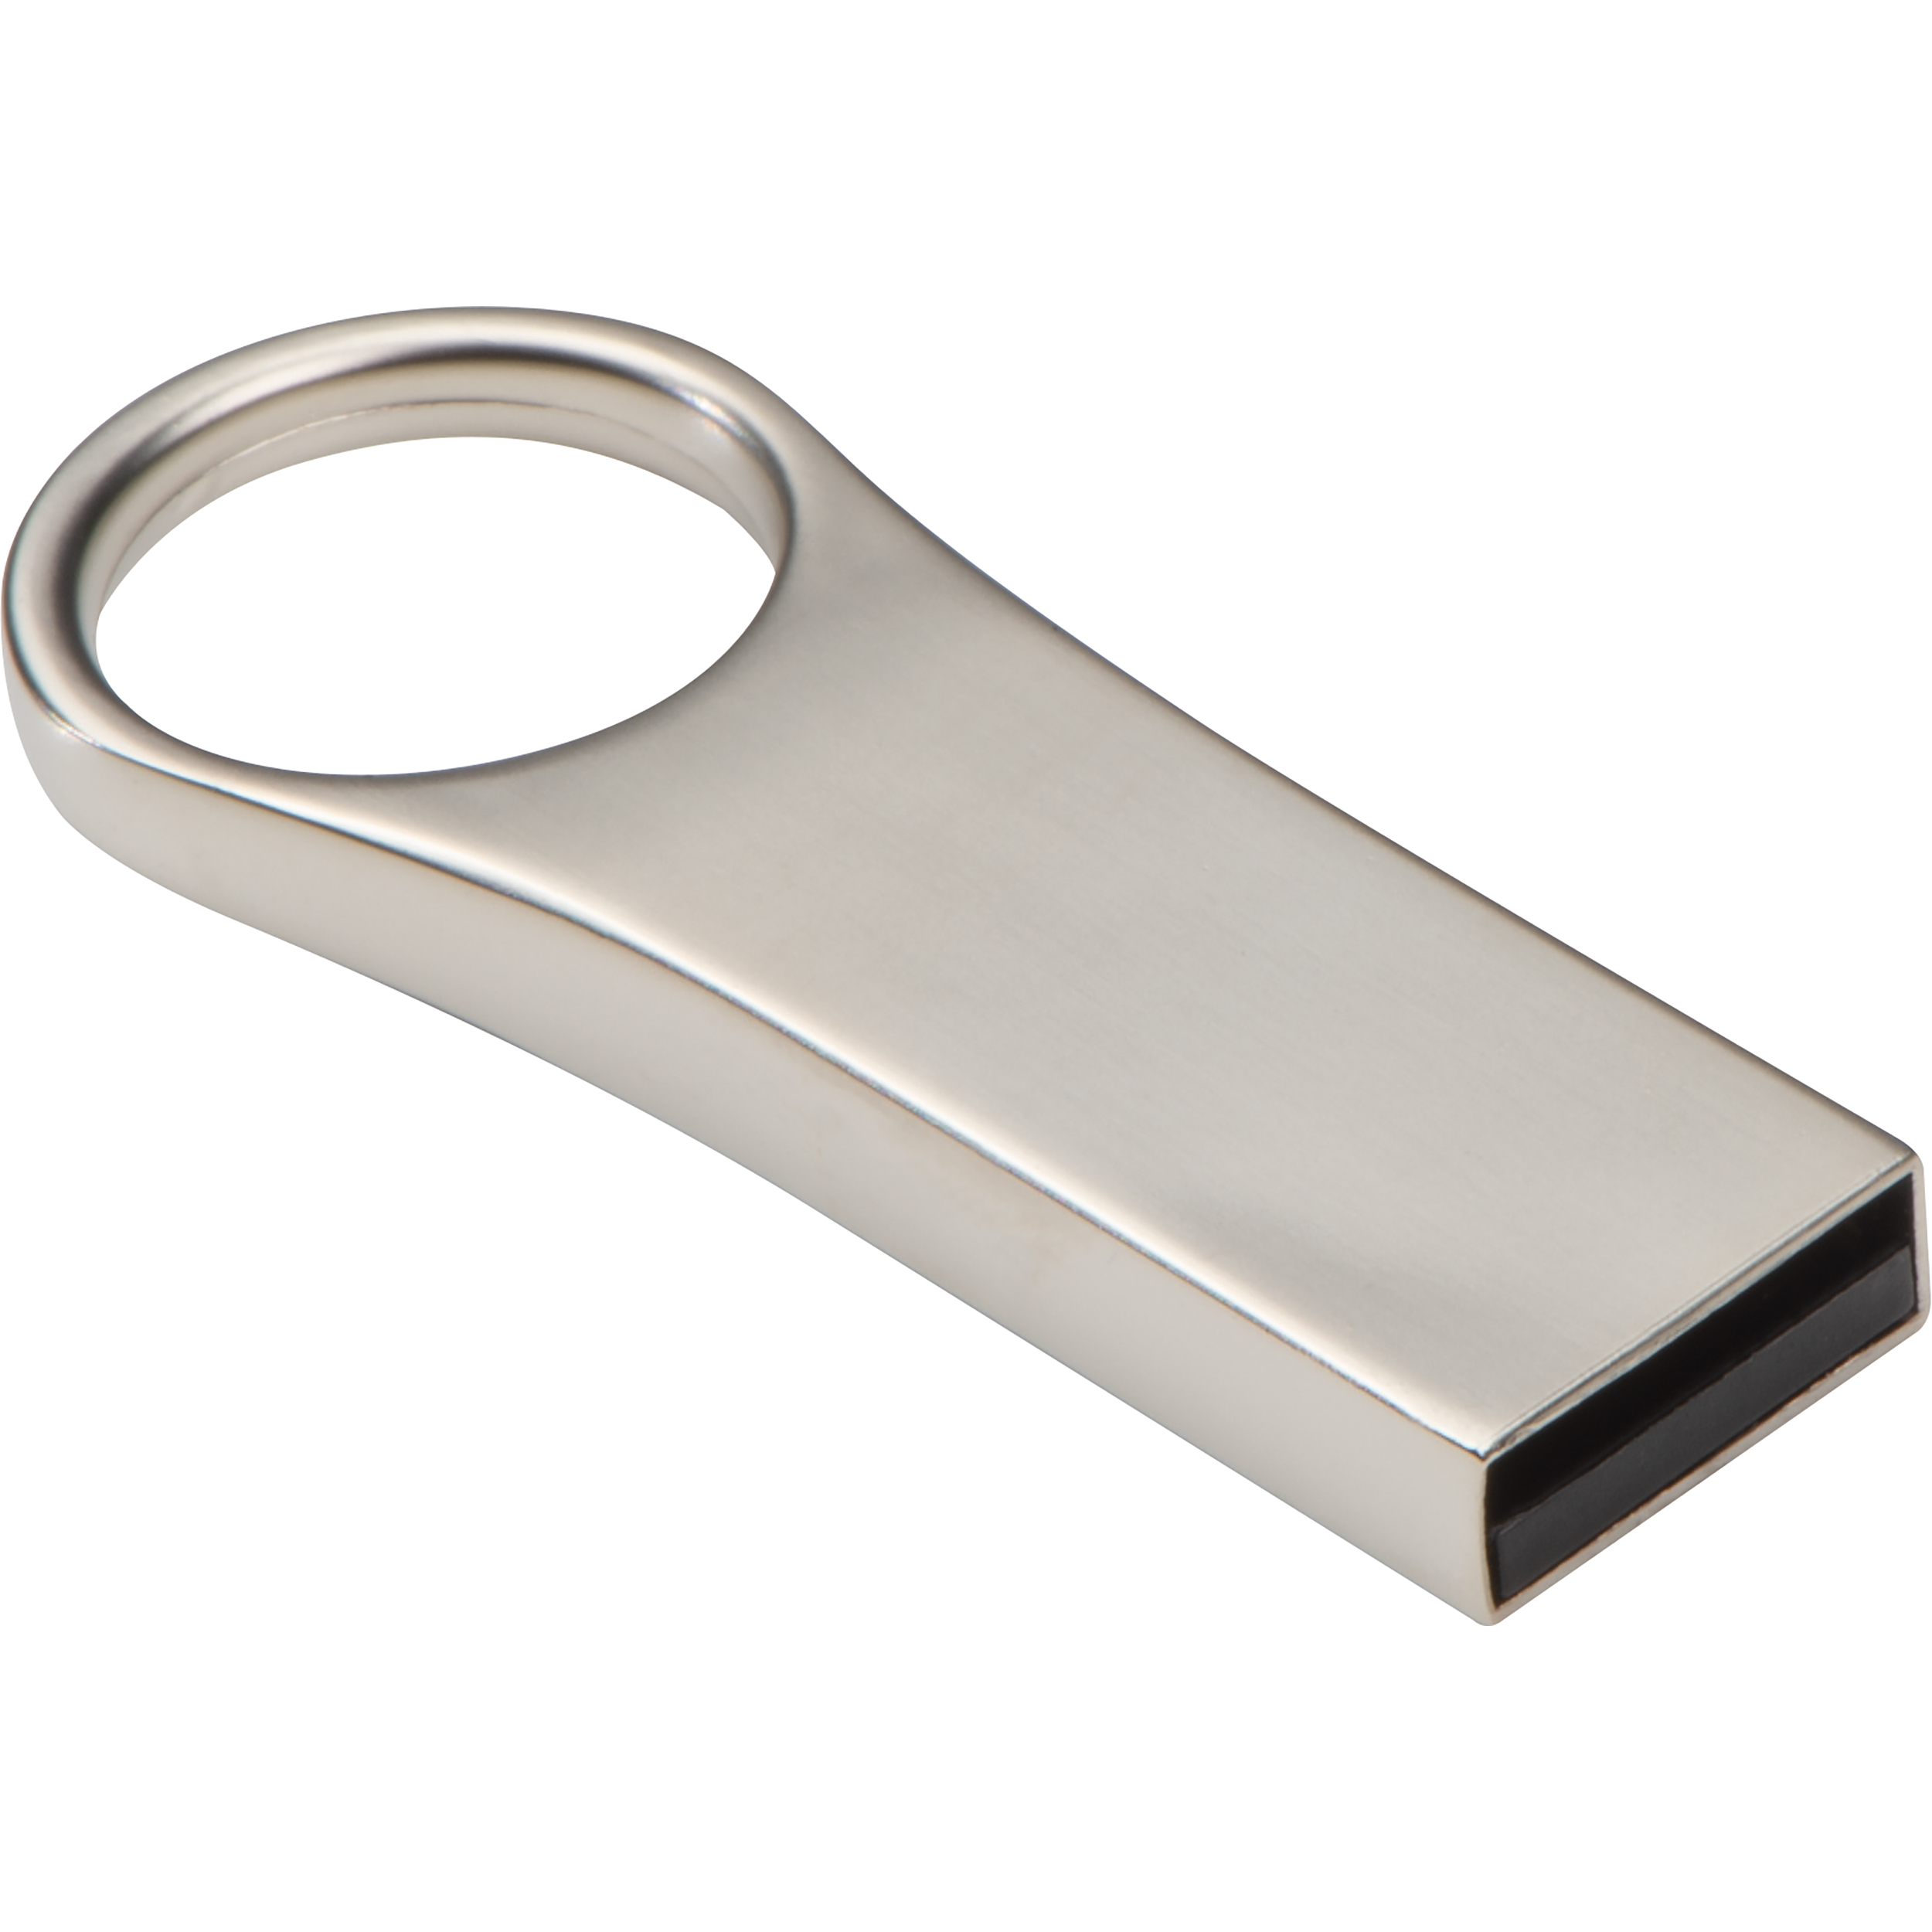 Chiavetta USB in metallo - 4GB